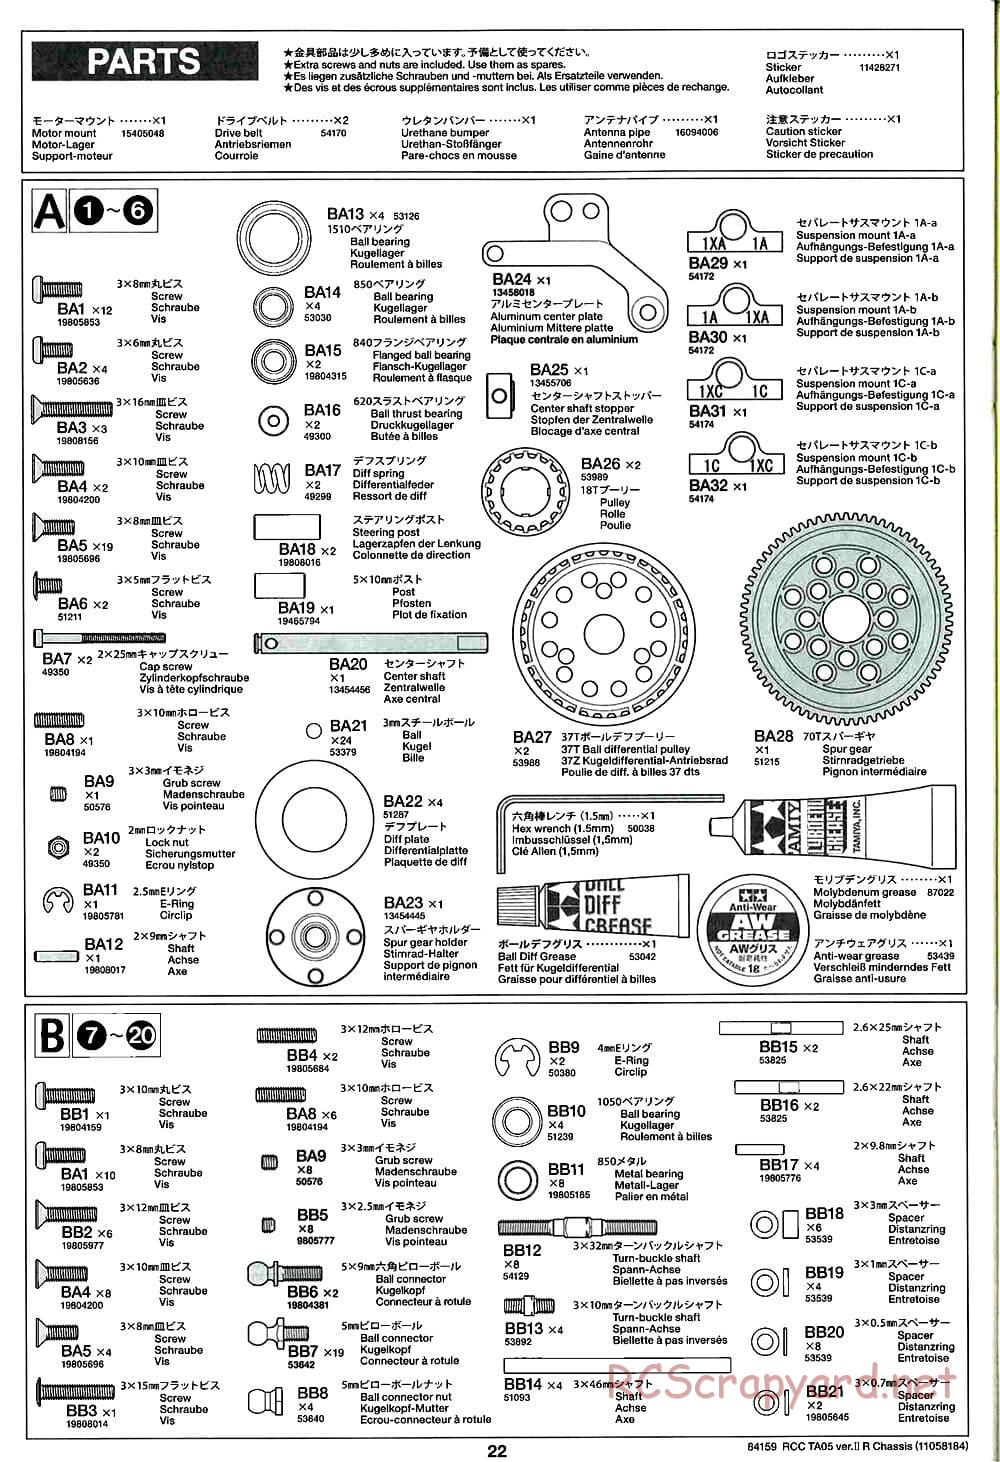 Tamiya - TA05 Ver.II R Chassis - Manual - Page 22